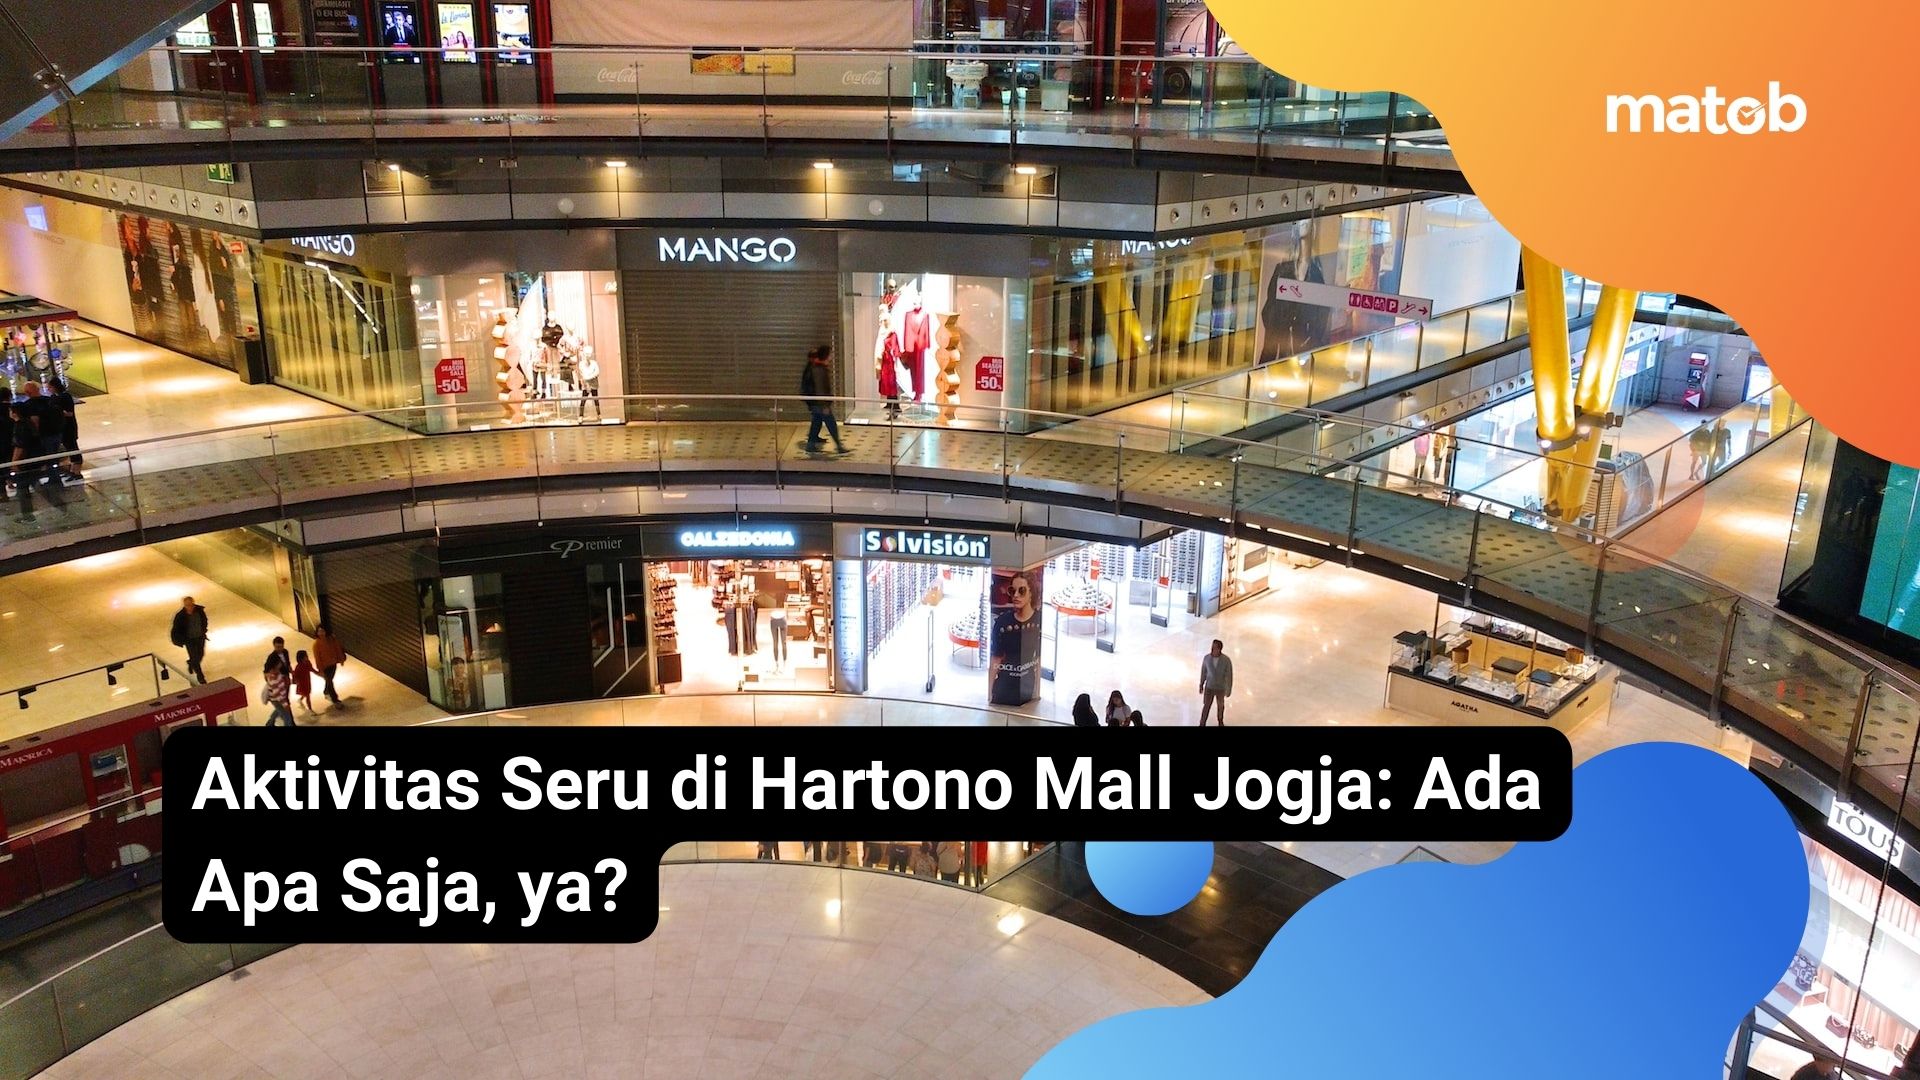 Aktivitas Seru di Hartono Mall Jogja: Ada Apa Saja, ya?